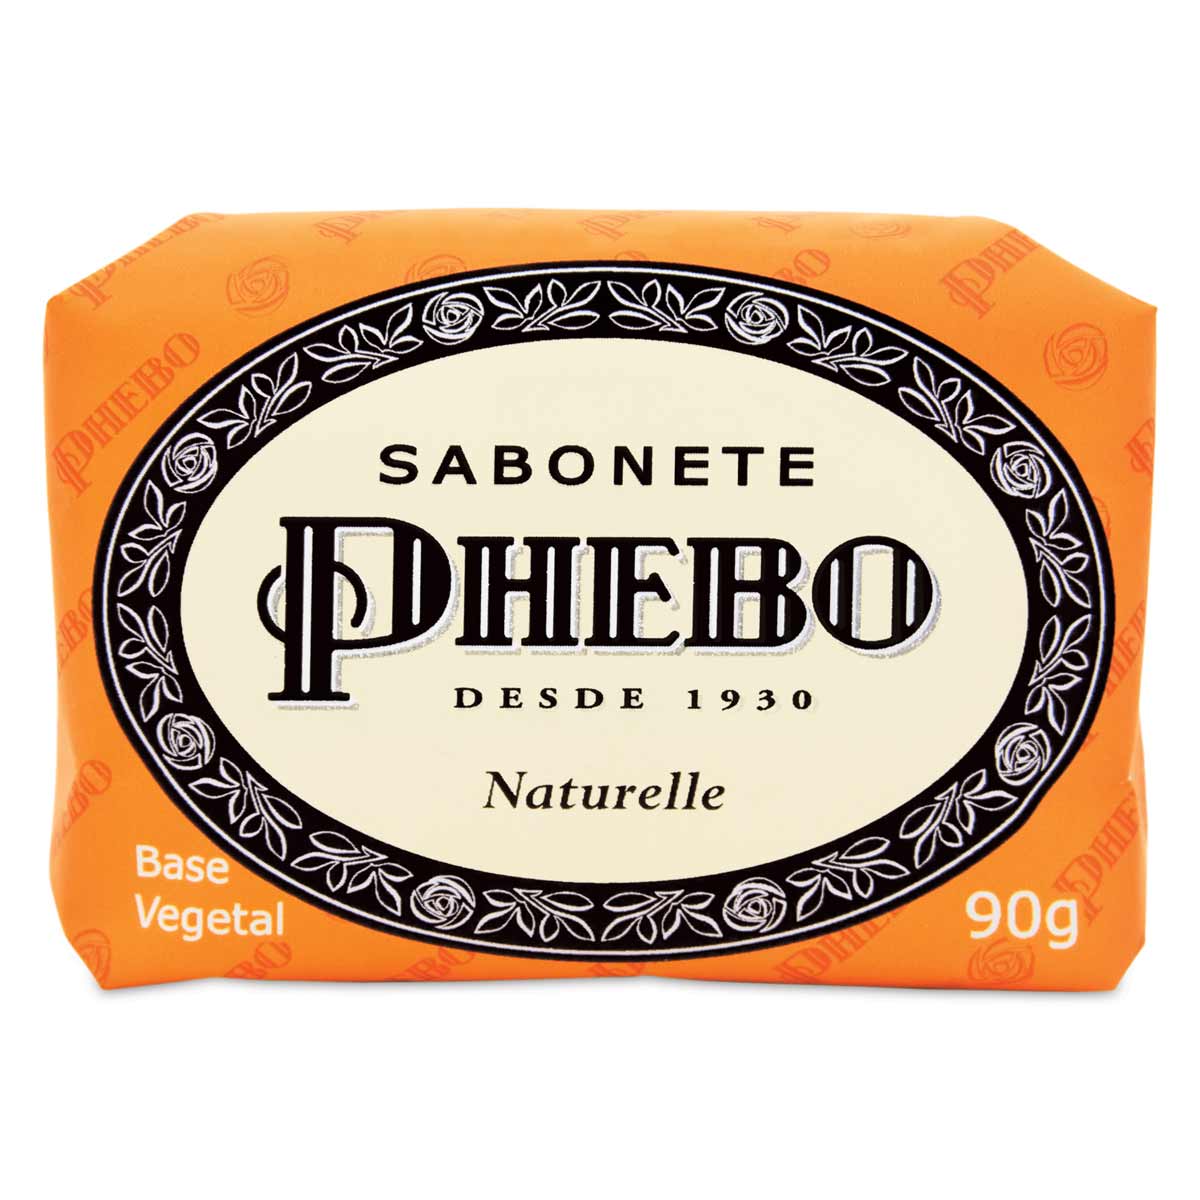 PHEBO Sabonete Sabonete de Glicerina PHEBO Naturelle 90g